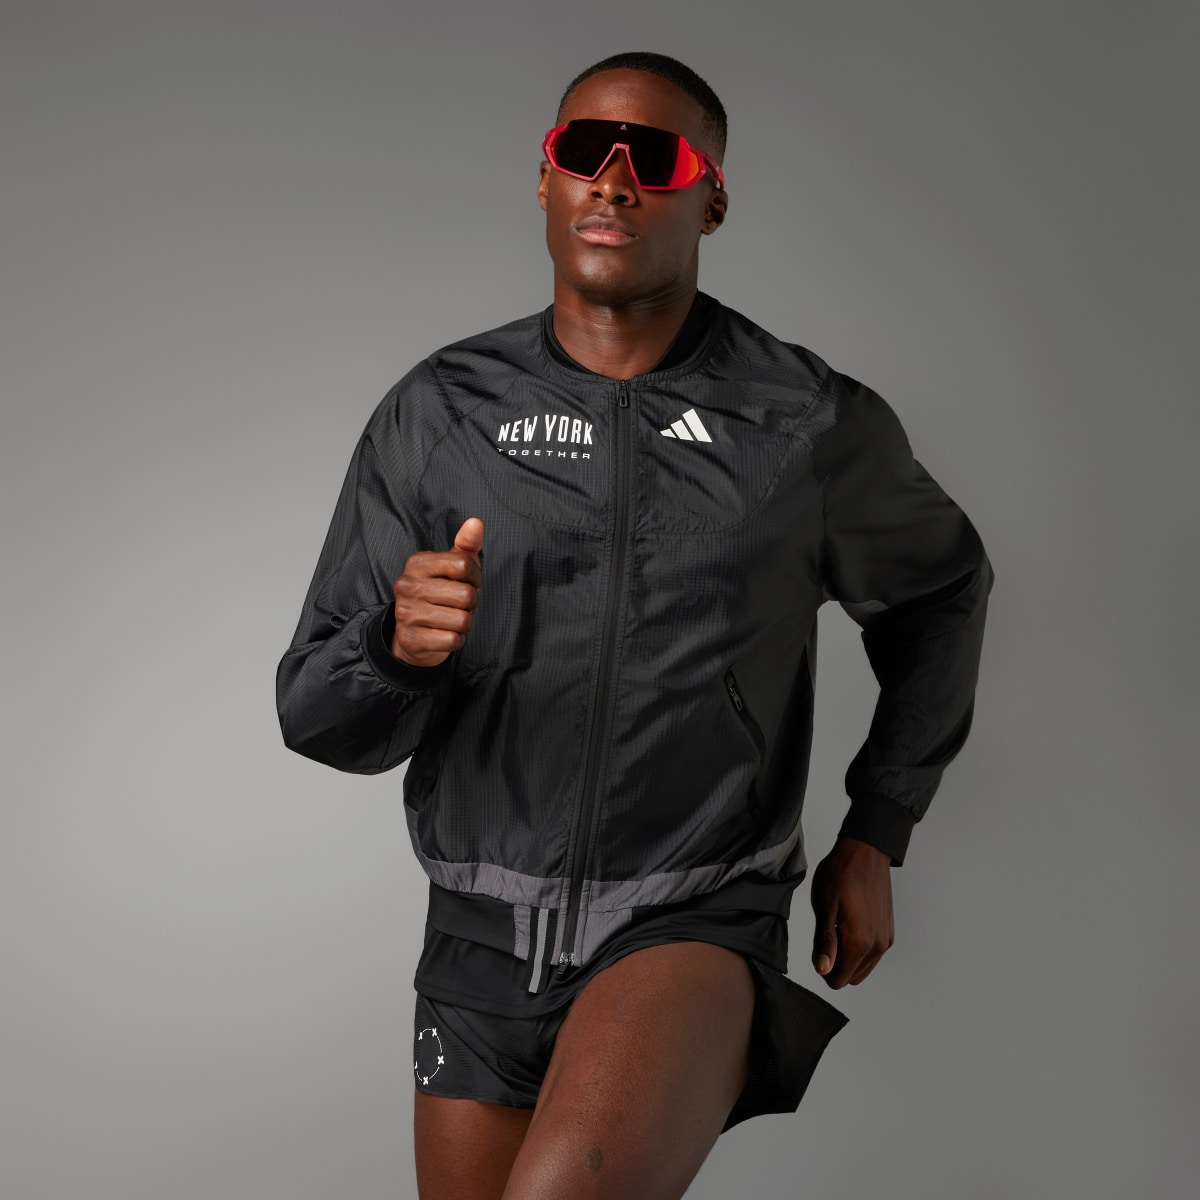 Adidas NYC Running Jacket (Gender Neutral). 4